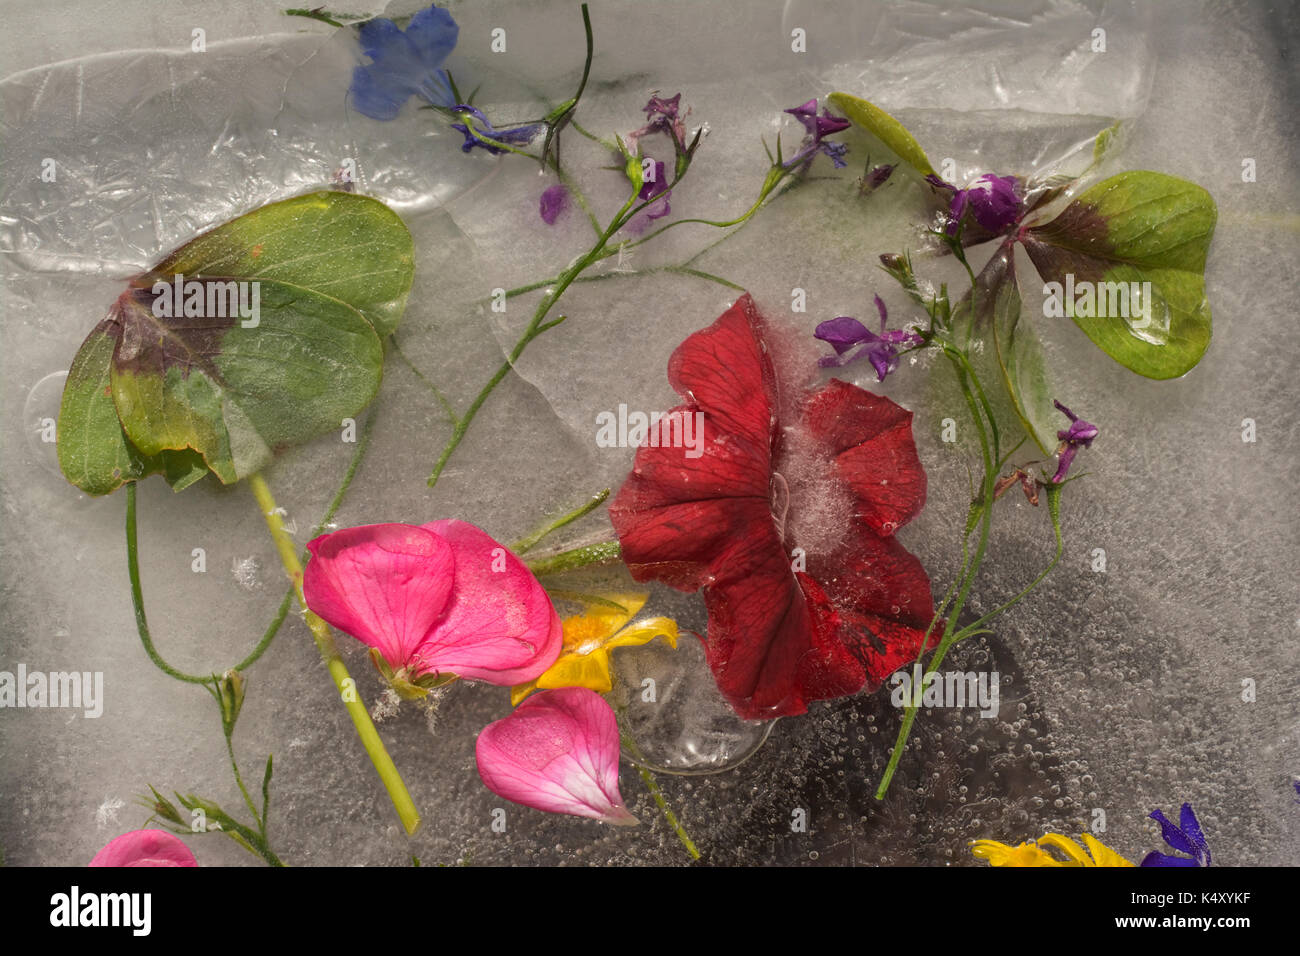 Flowers foroen in ice Stock Photo